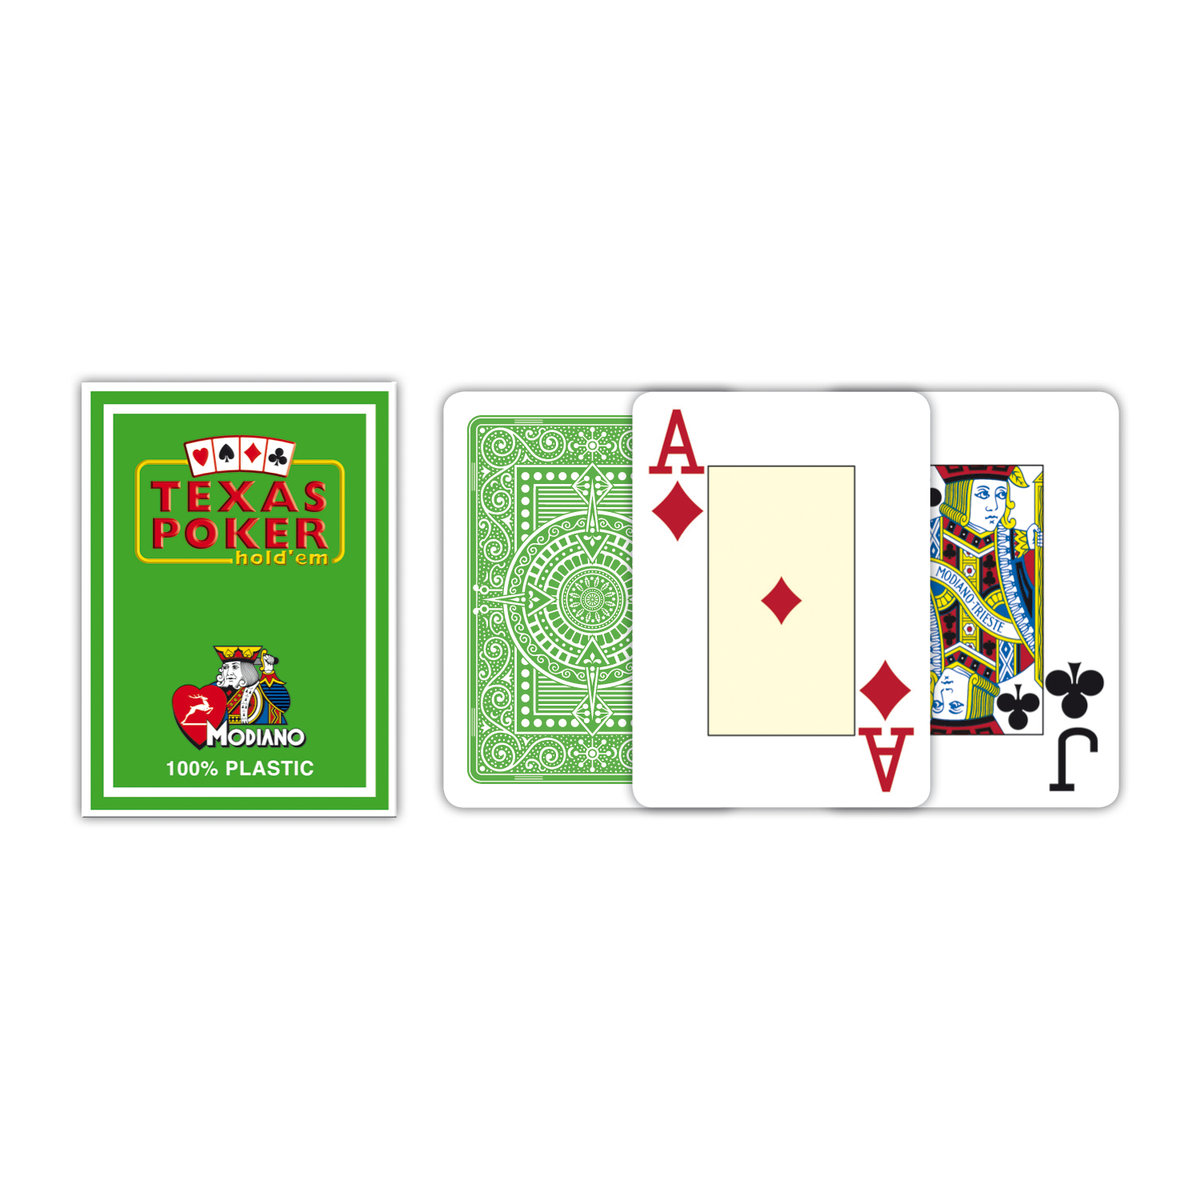 Modiano, karty Texas Poker Jumbo Index Plastic Jasno, zielony